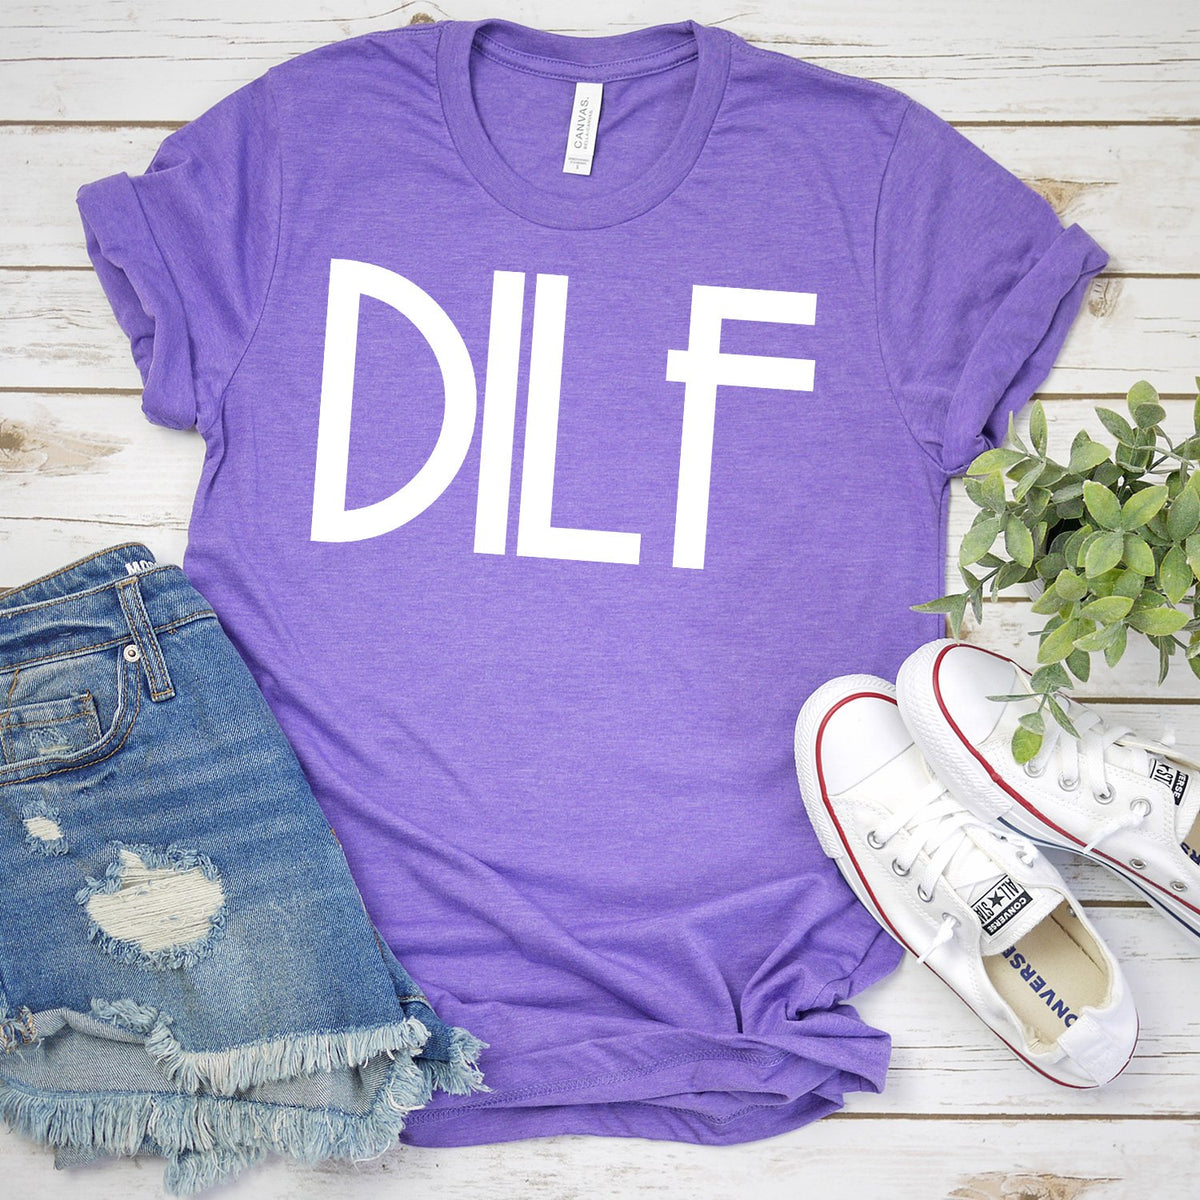 DILF - Short Sleeve Tee Shirt